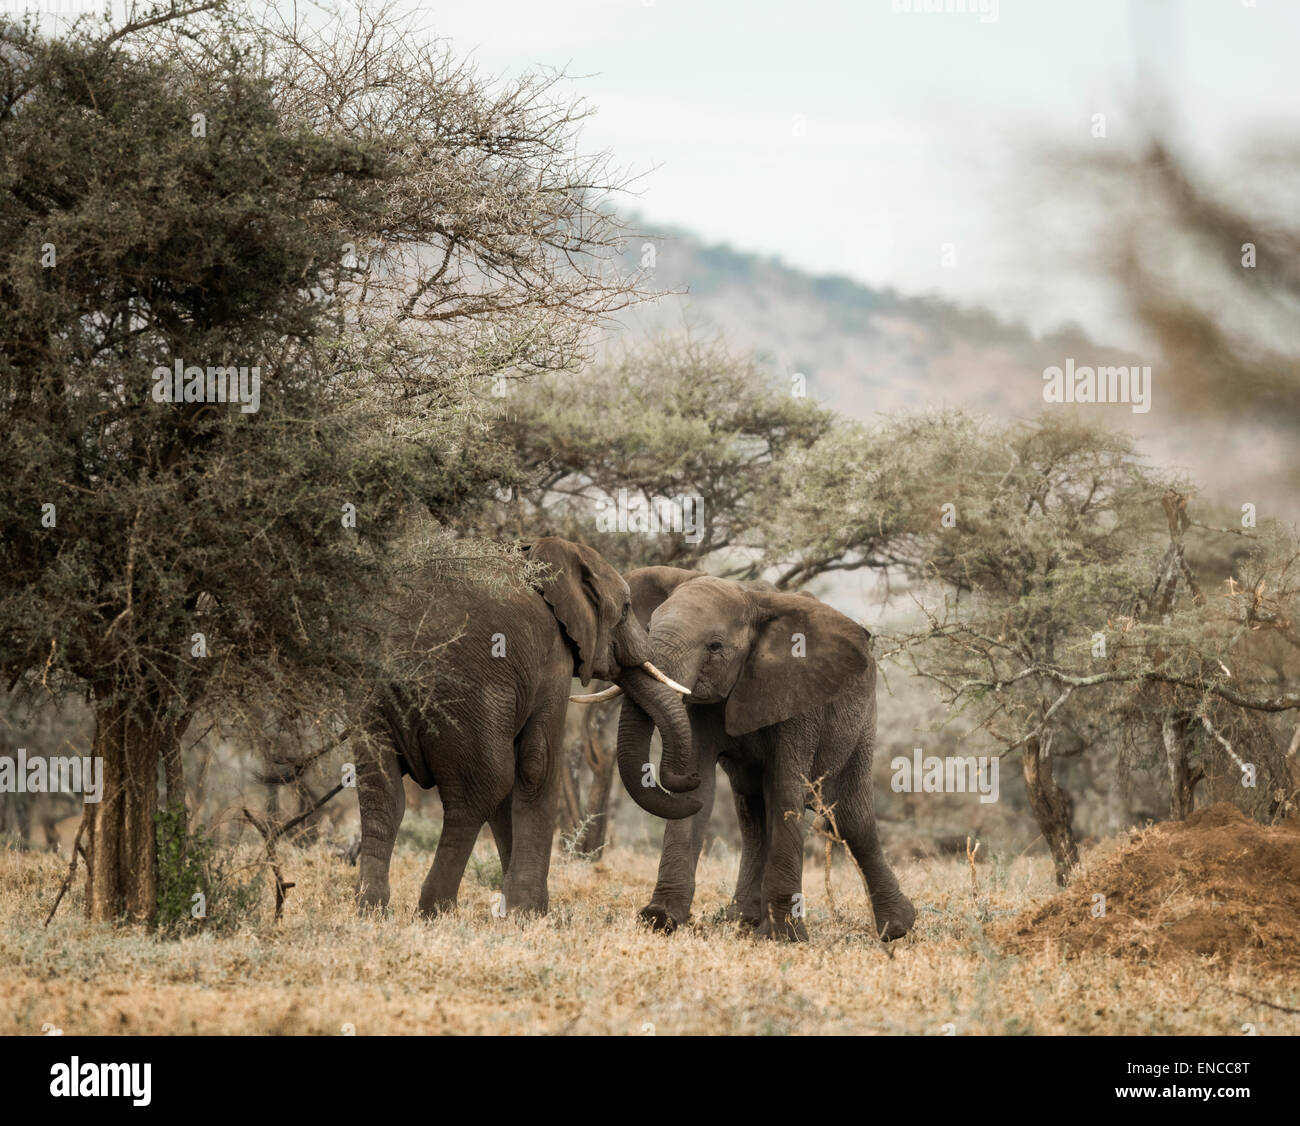 Young elephants playing, Serengeti, Tanzania, Africa Stock Photo